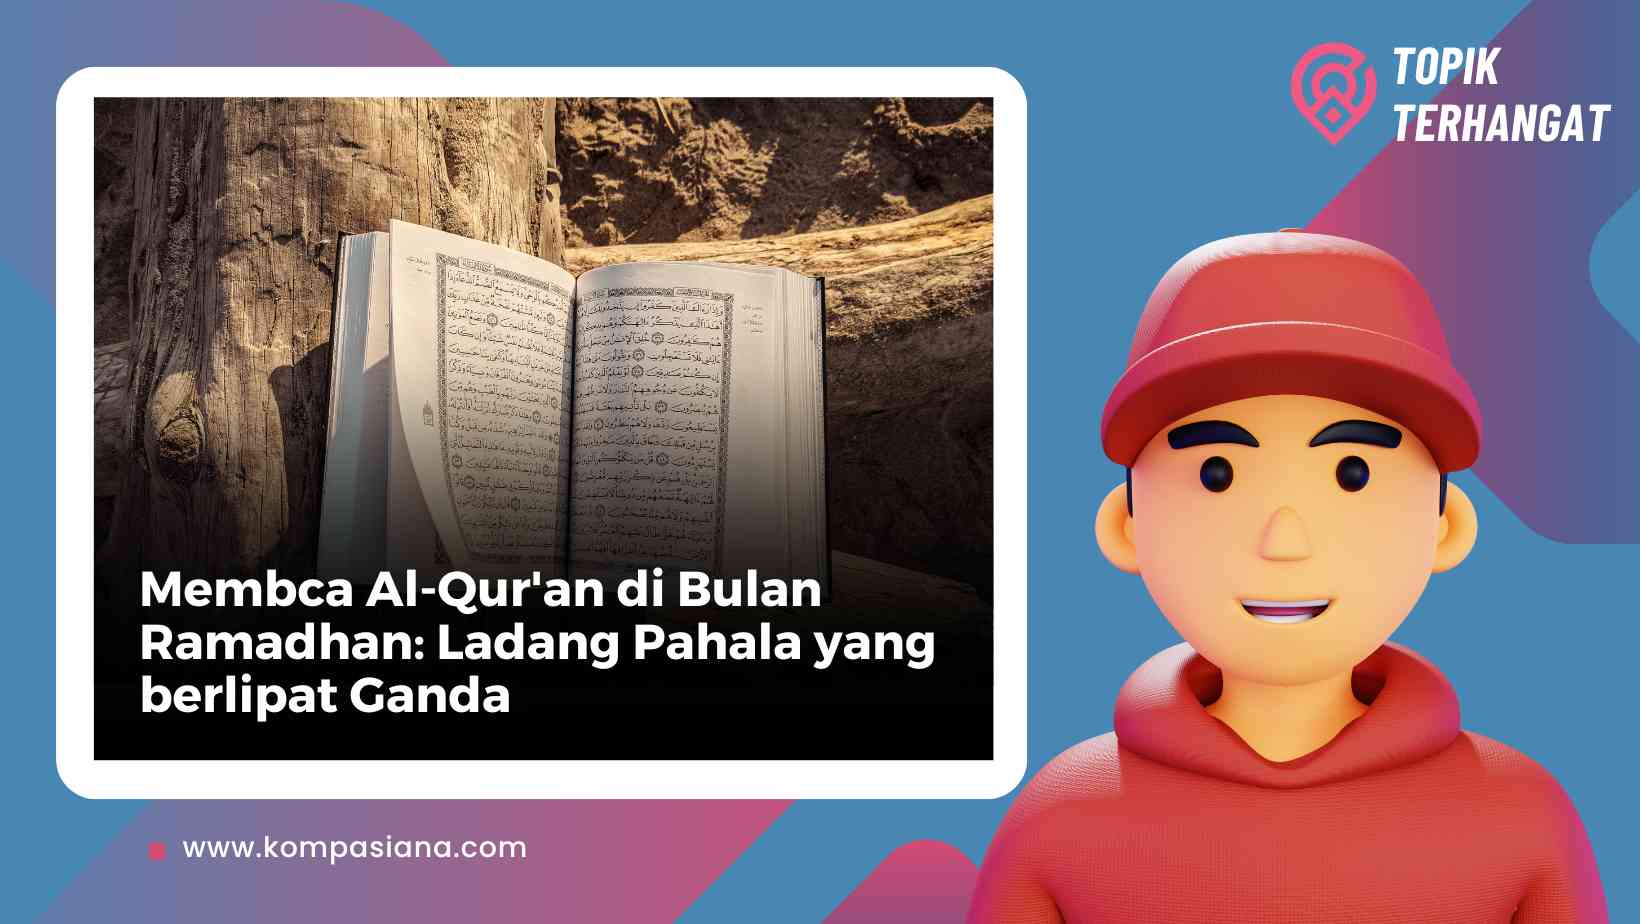 Membca Al-Qur'an di Bulan Ramadhan: Ladang Pahala yang berlipat Ganda